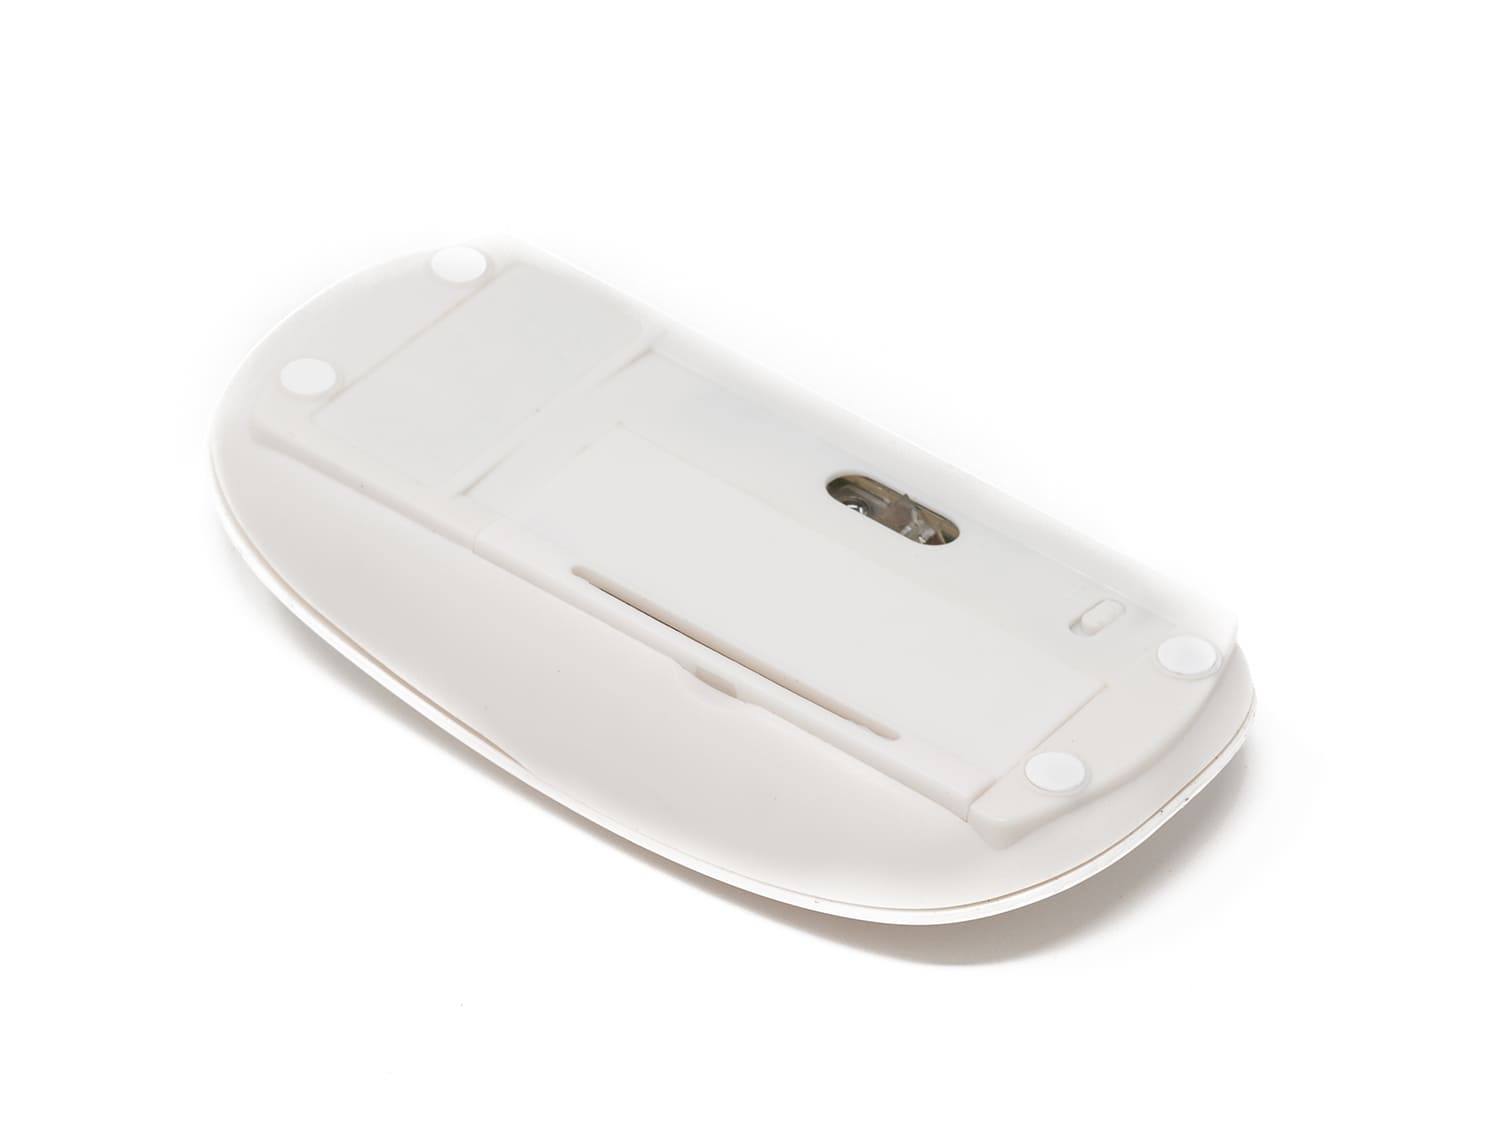 Ultimaxx wireless mouse